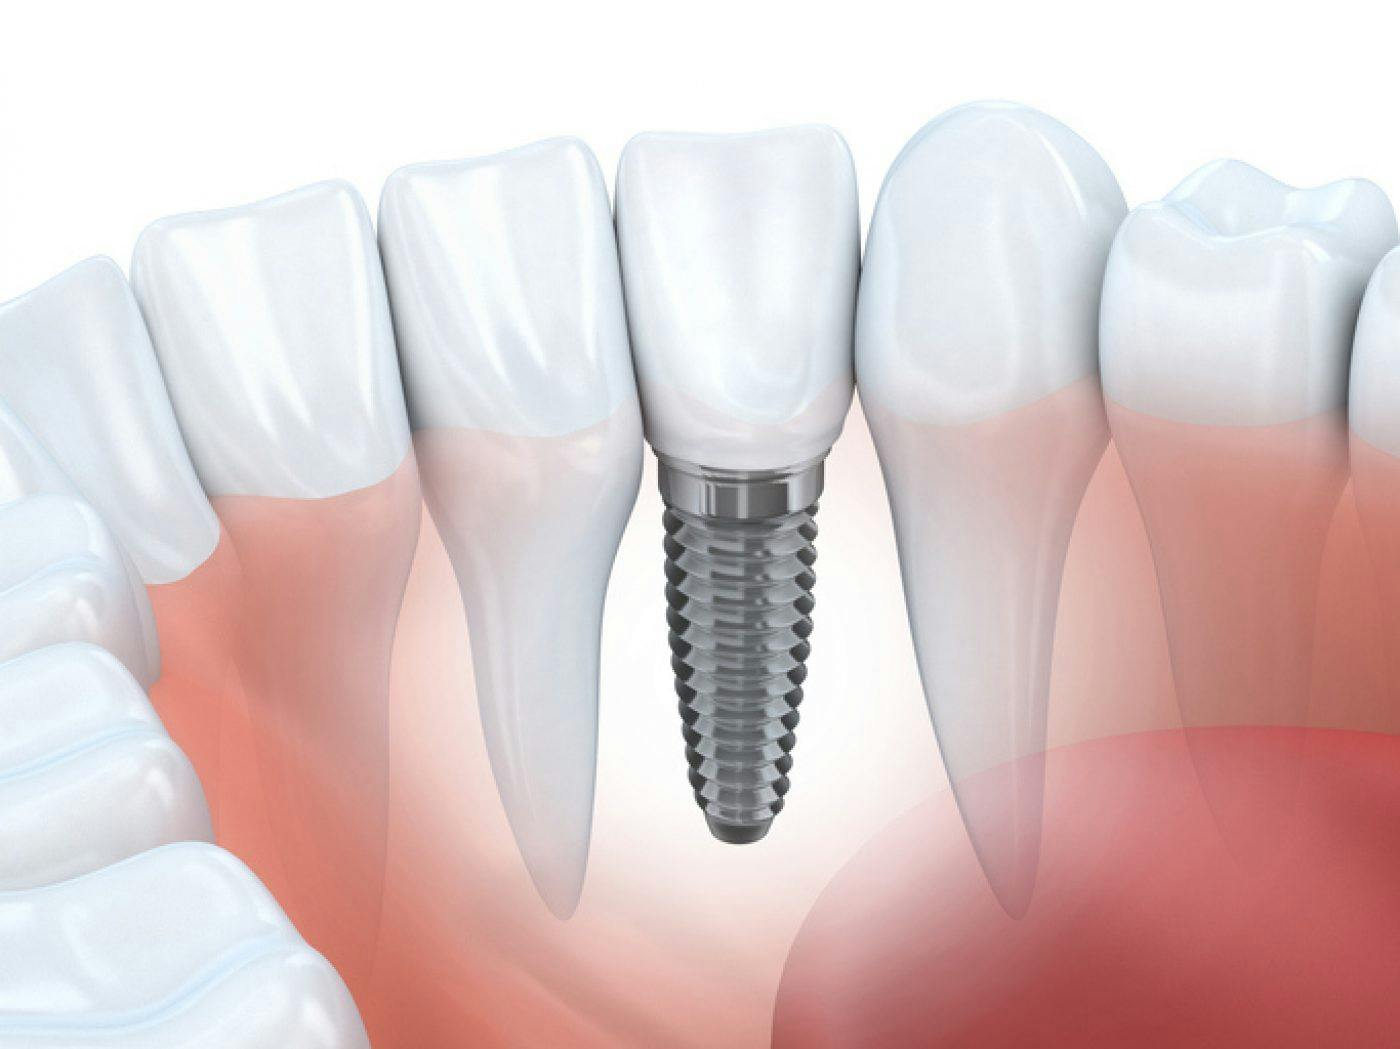 Single Implant Portman Dental And Implant Clinic Maidenhead